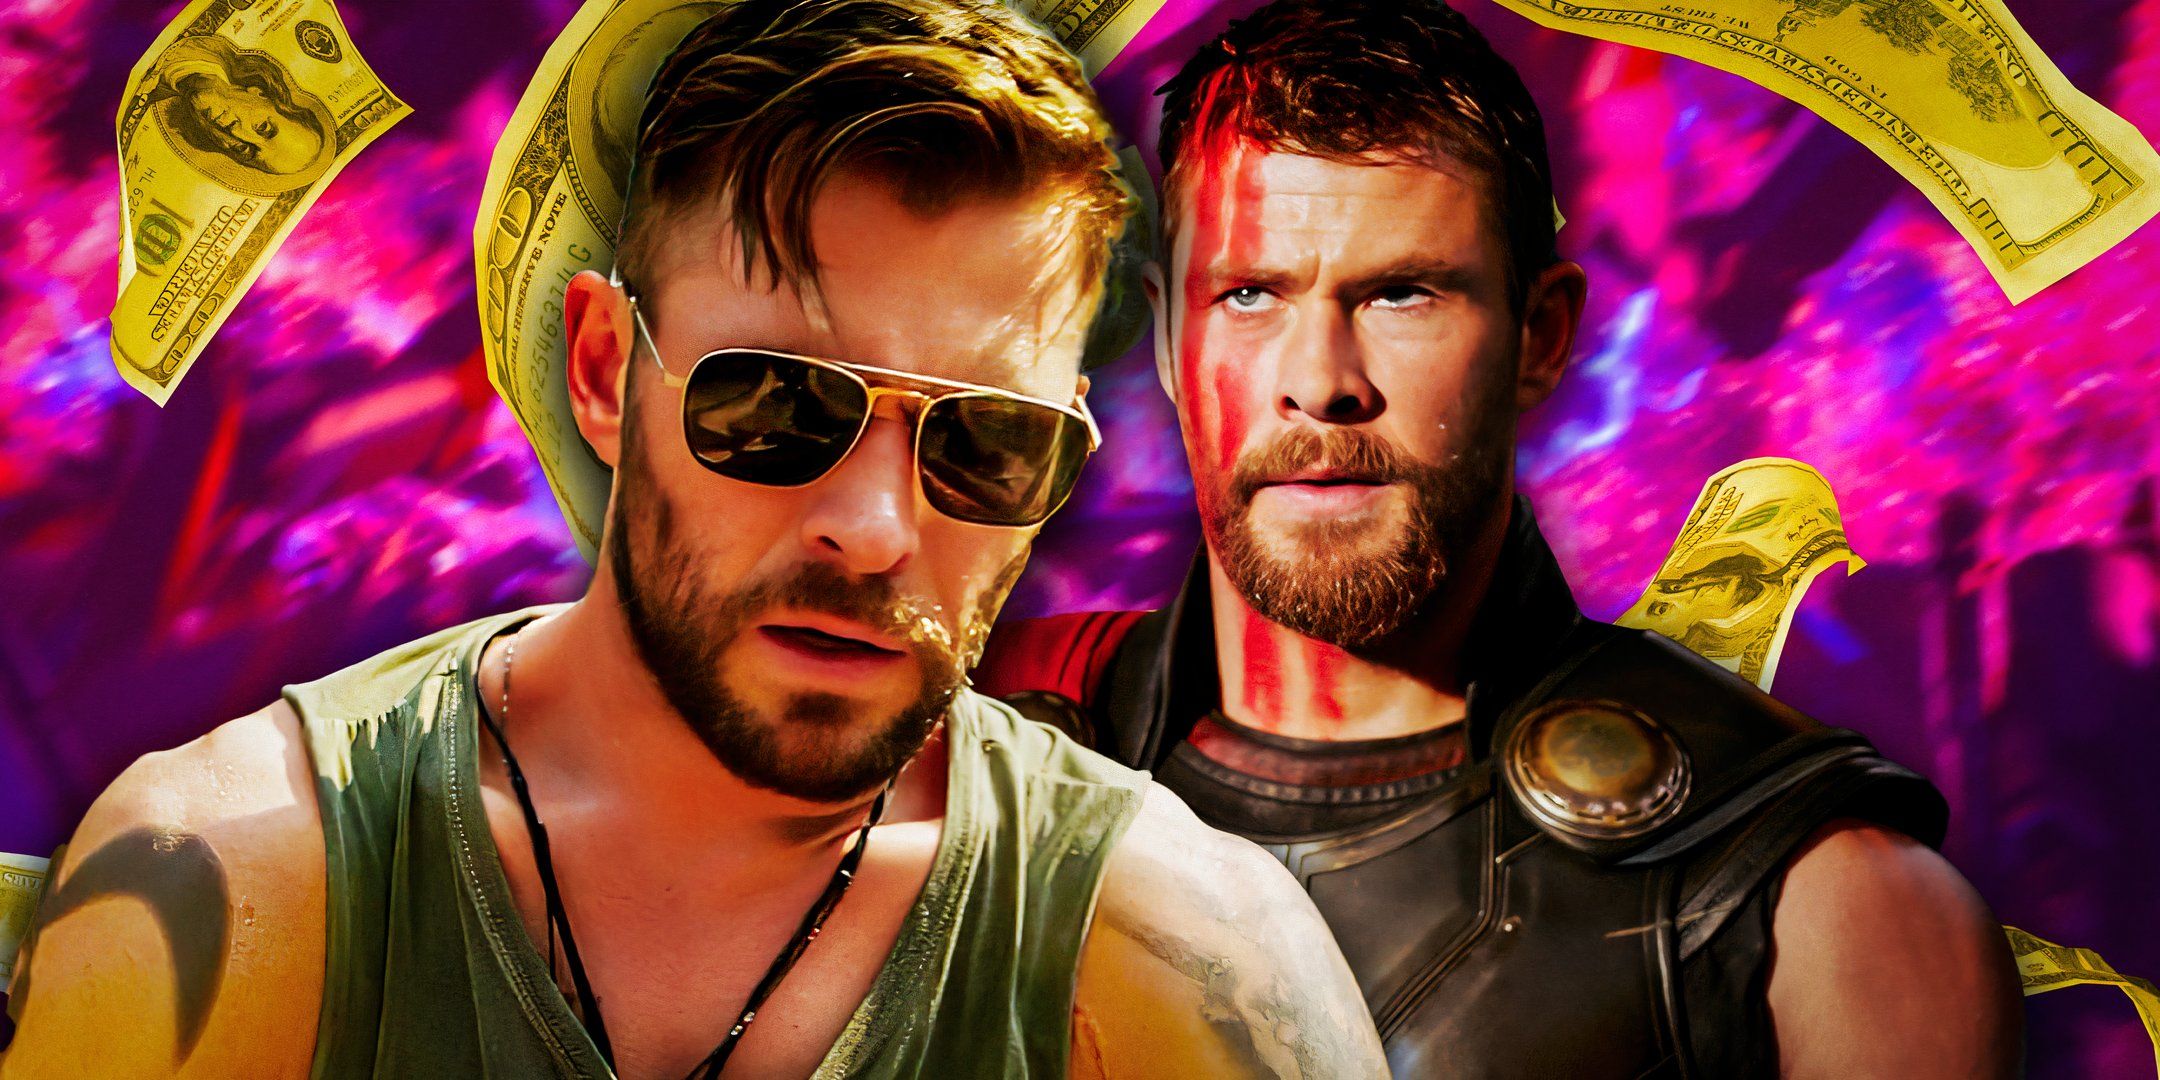 Chris Hemsworth as Tyler Rake from Extraction and Chris Hemsworth as Thor from Thor Ragnarok